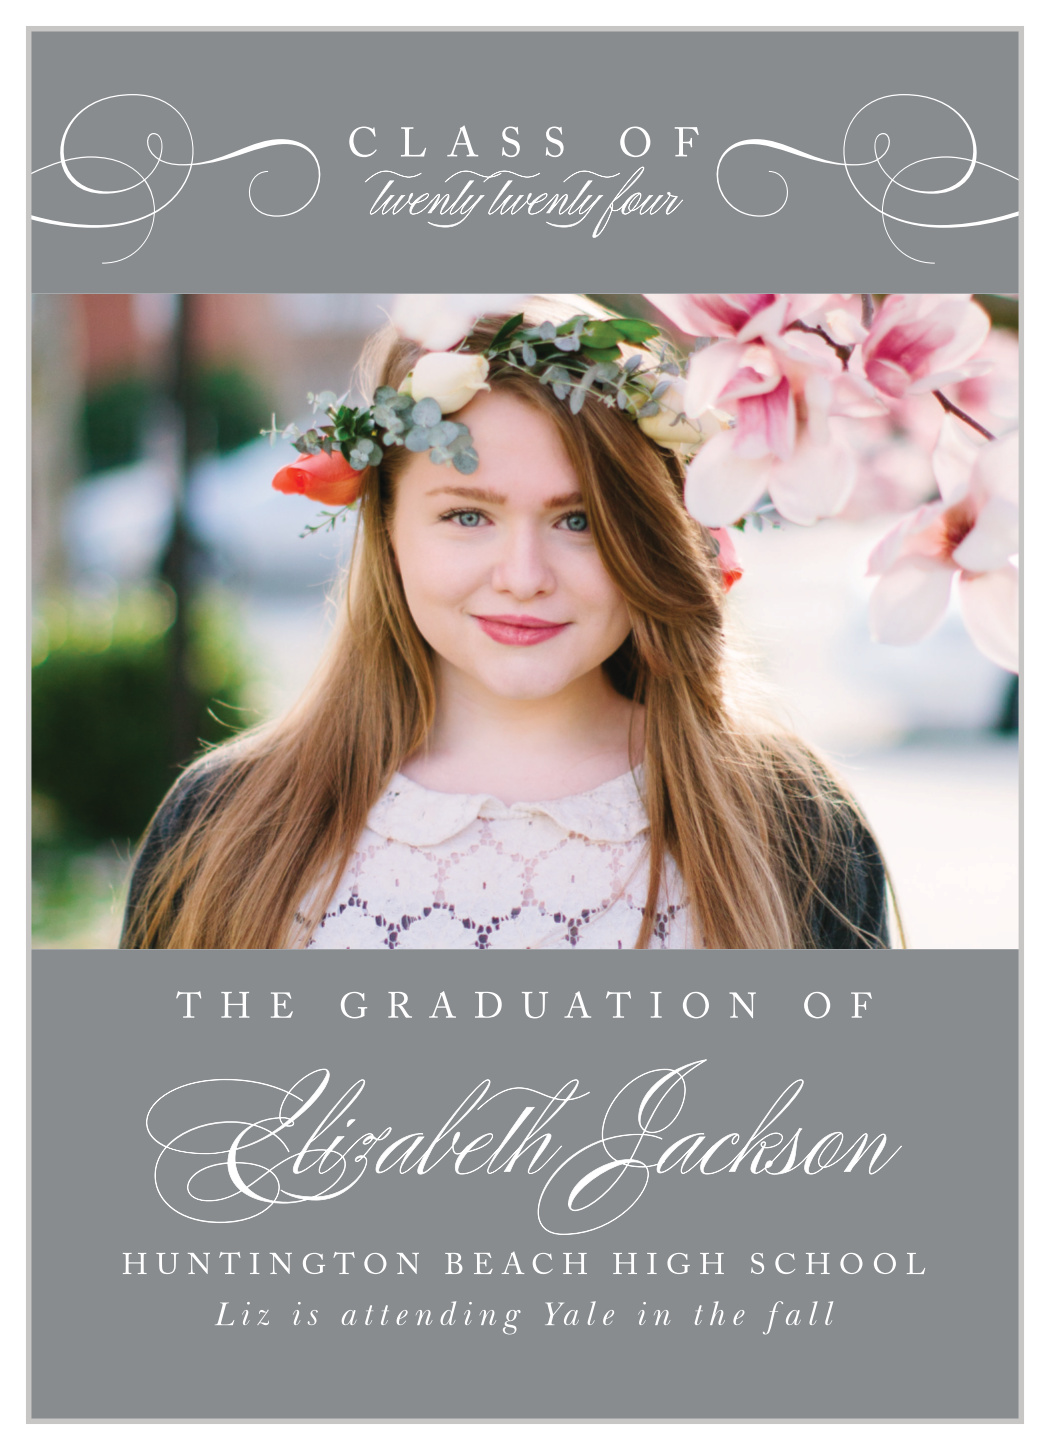 Elegant Senior Graduation Announcements by Basic Invite